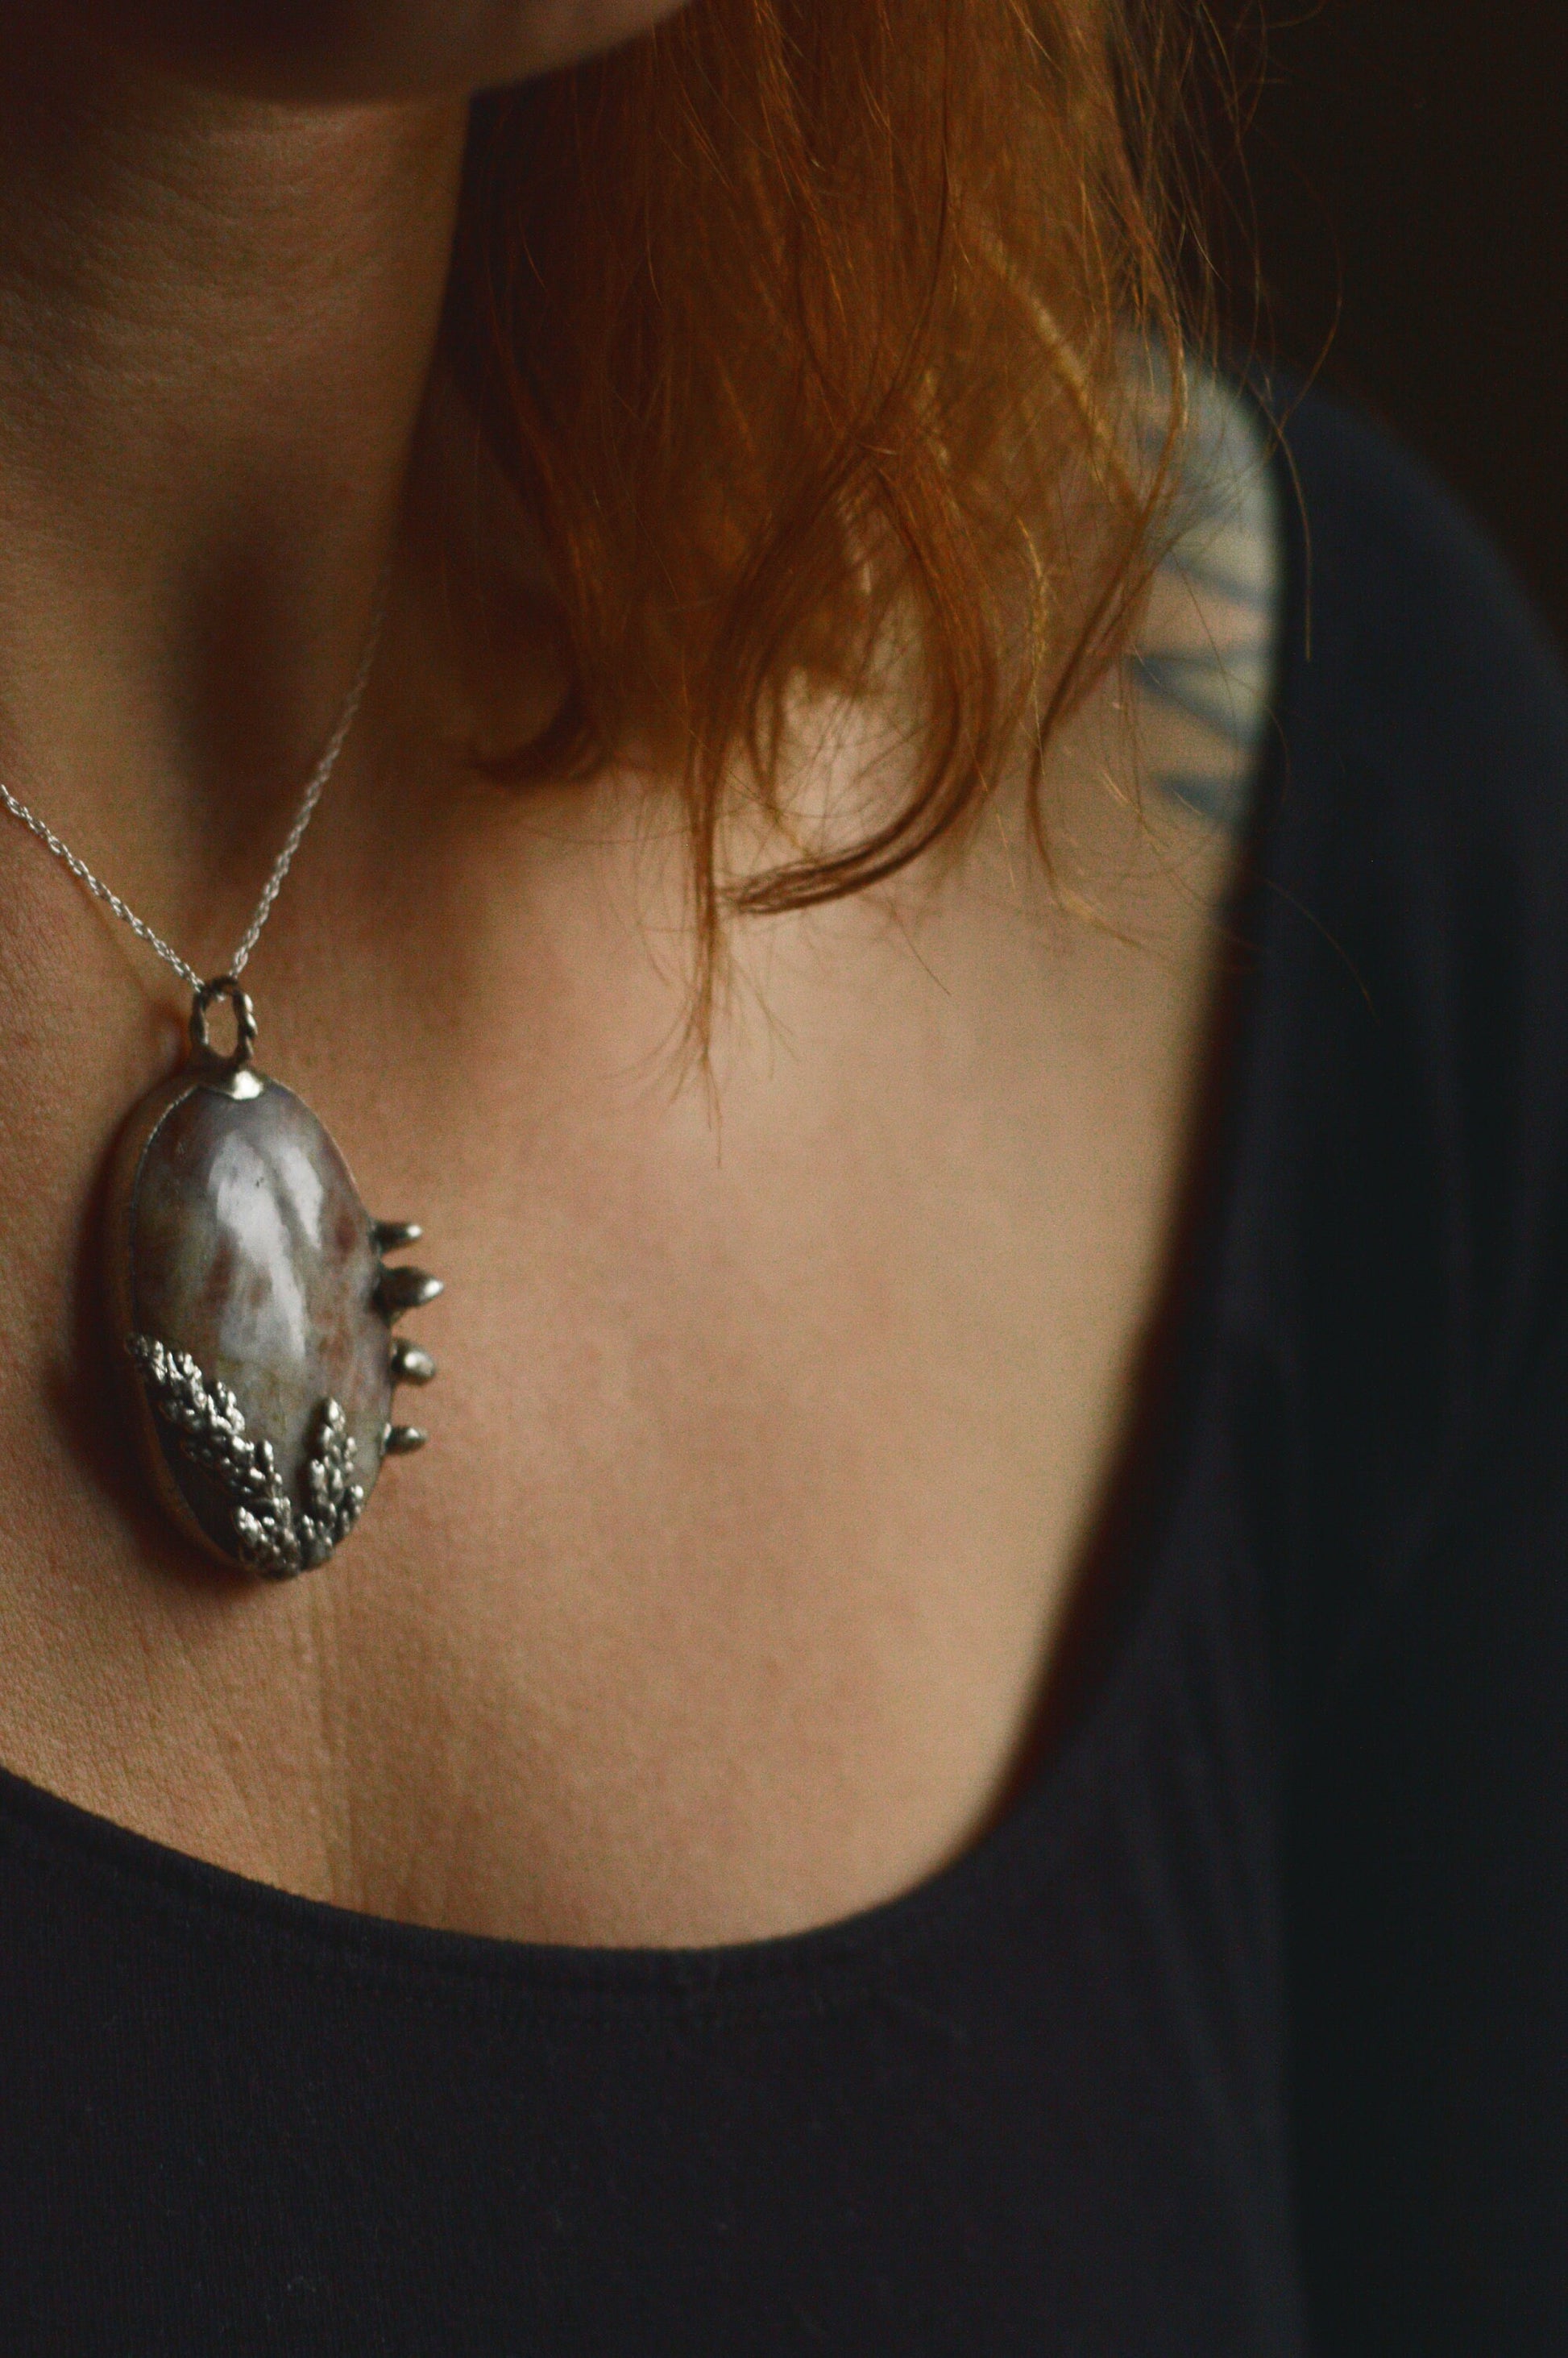 Harvest.3 collection - Rare moonstone/sunstone pendant with botanical elements, enchanted woodland necklace